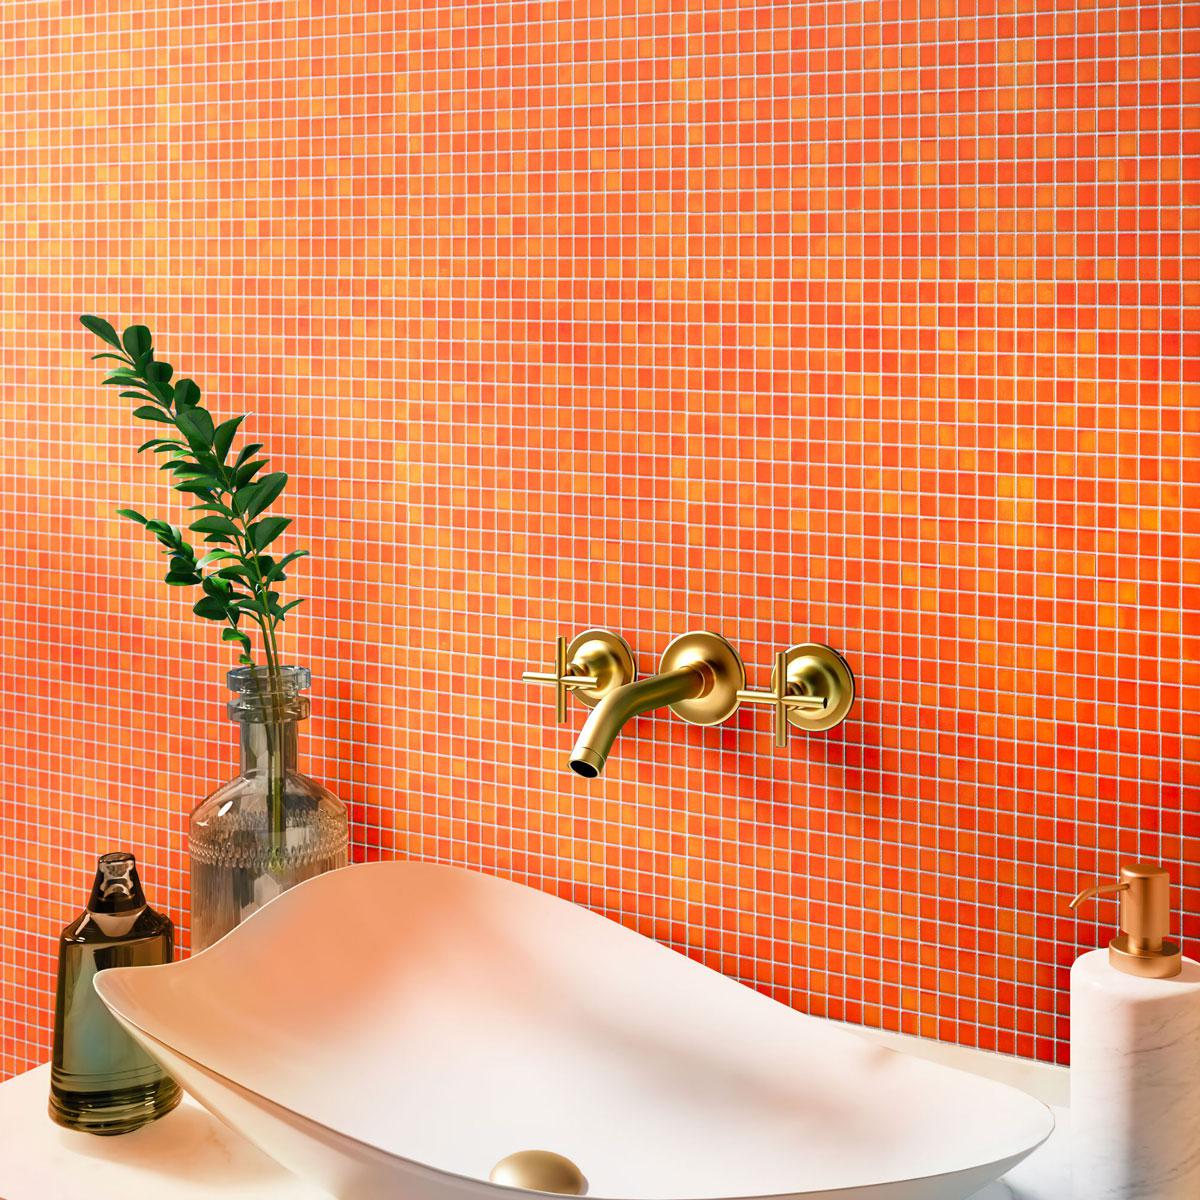 Bright Orange Squares Glass Pool Tile Bathroom Backsplash